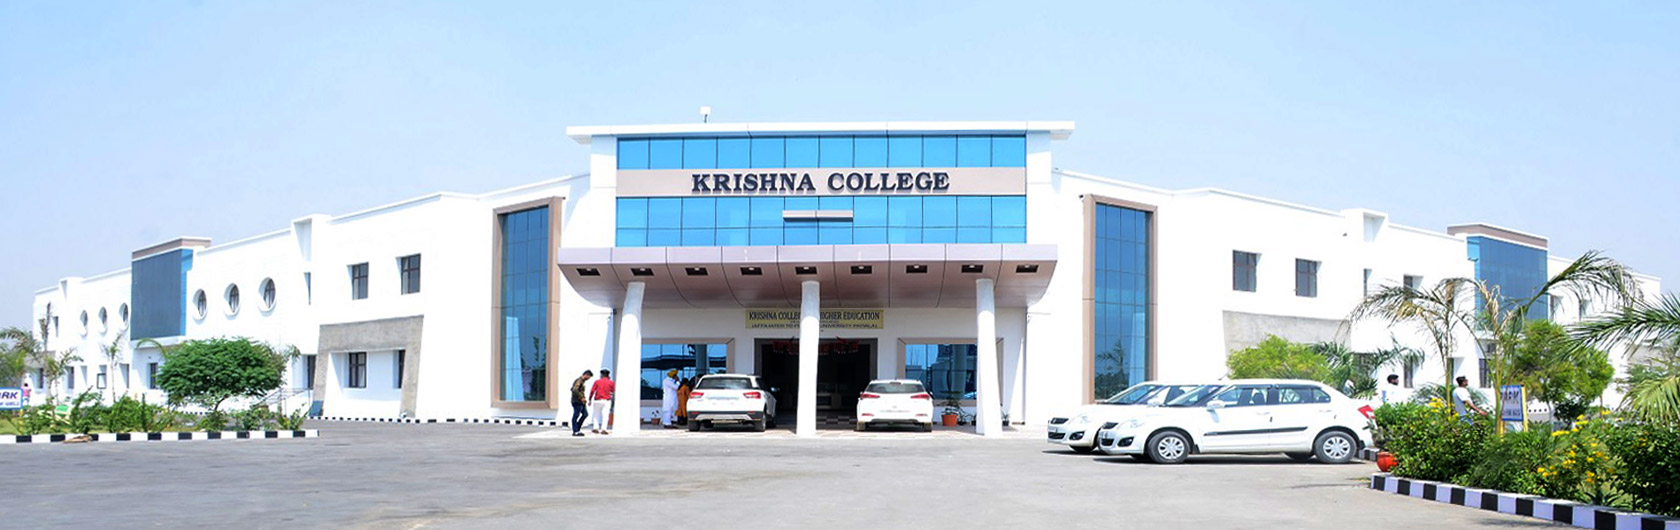 Krishna College of Higher Education, Mansa Image